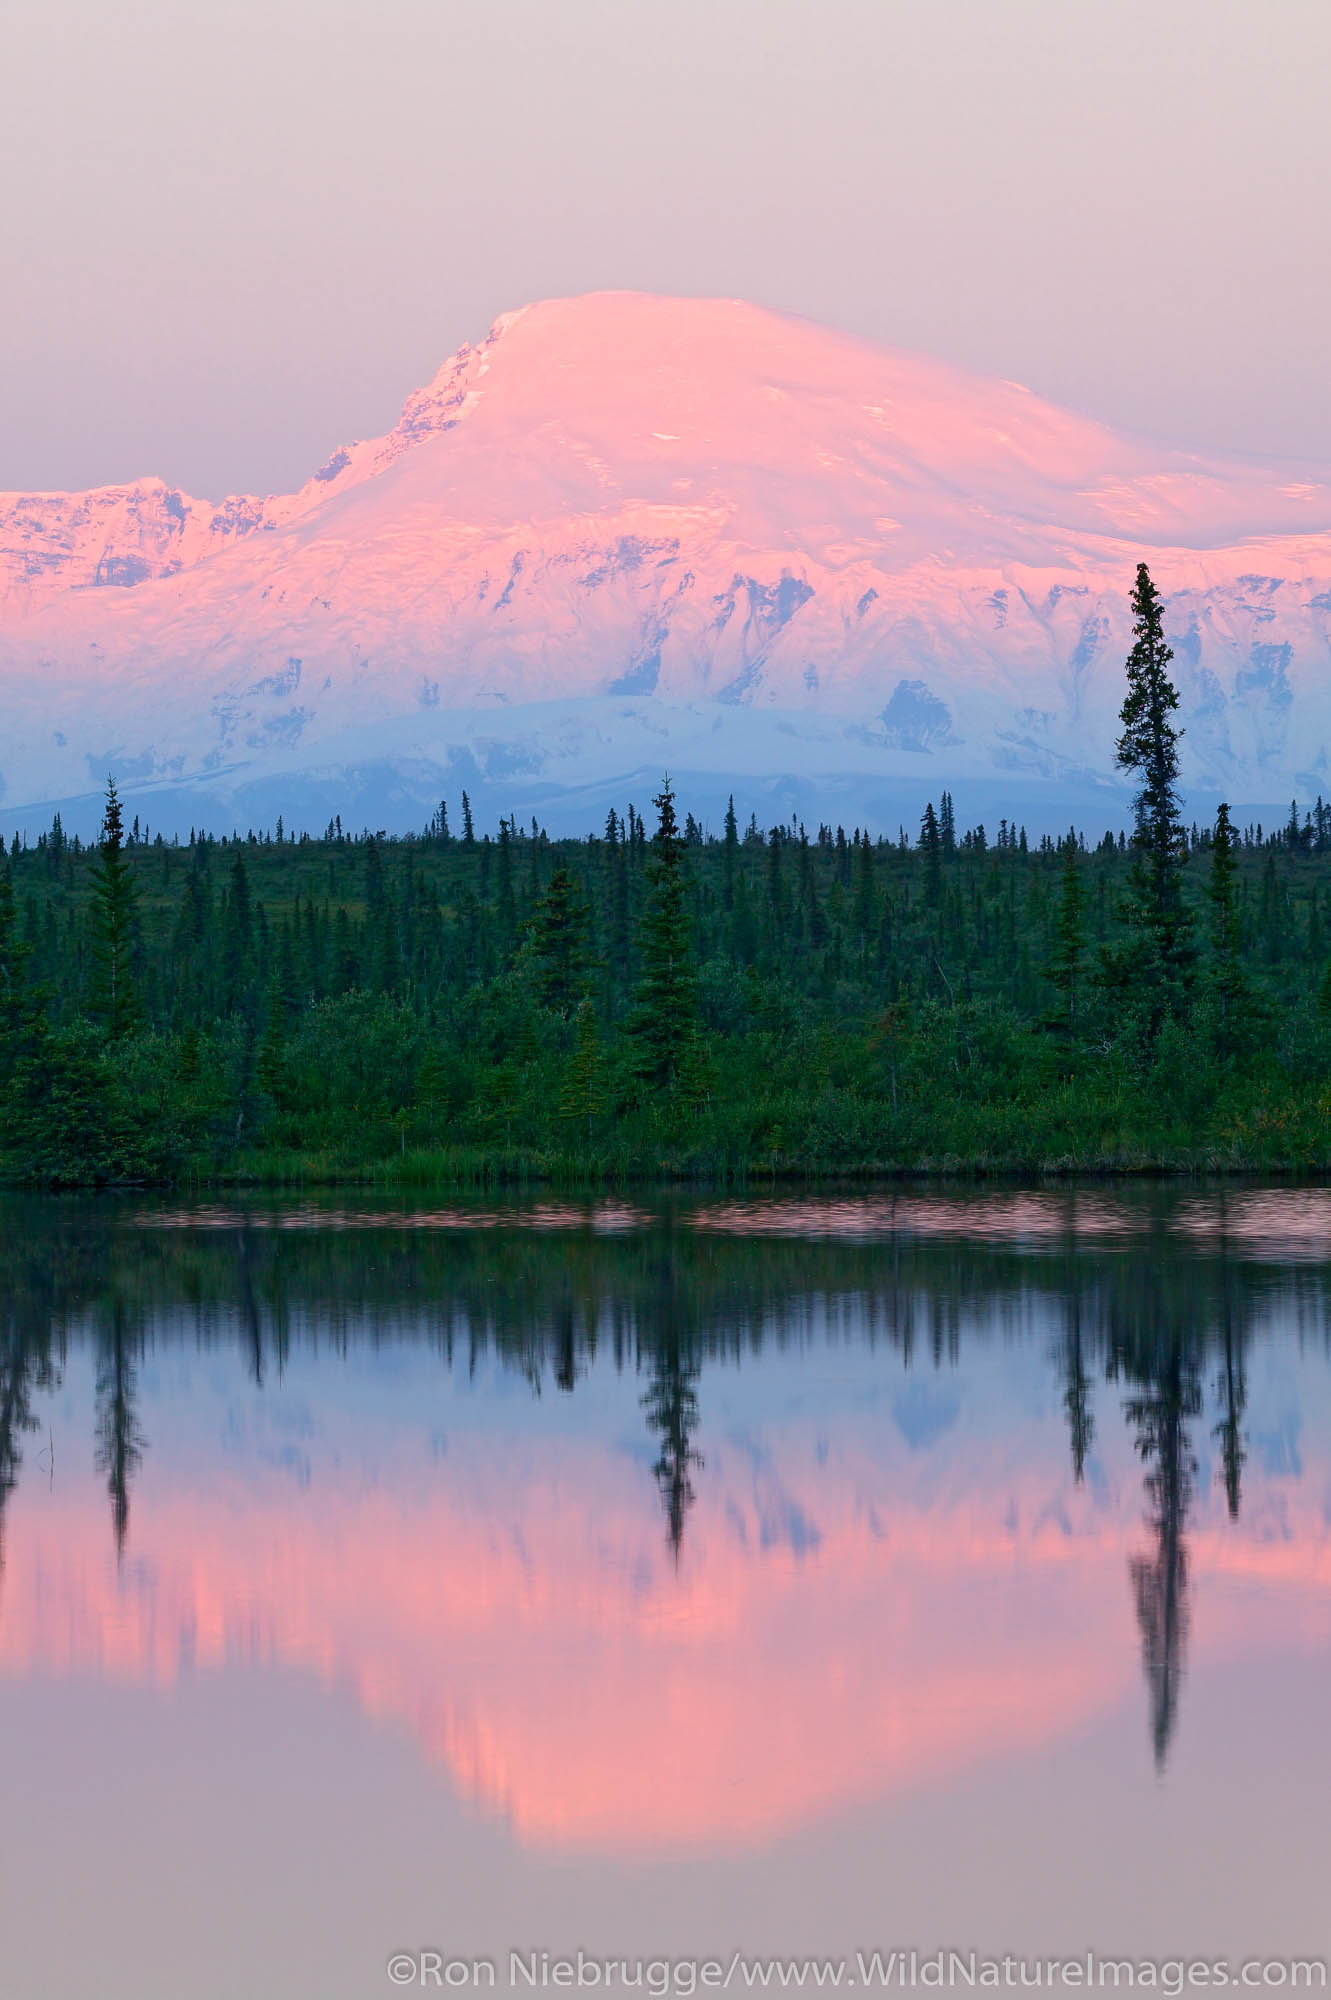 Mt. Sanford (16,237 feet) at sunrise from Rock Lake along the Nabesna Road, Wrangell-St Elias National Park, Alaska.